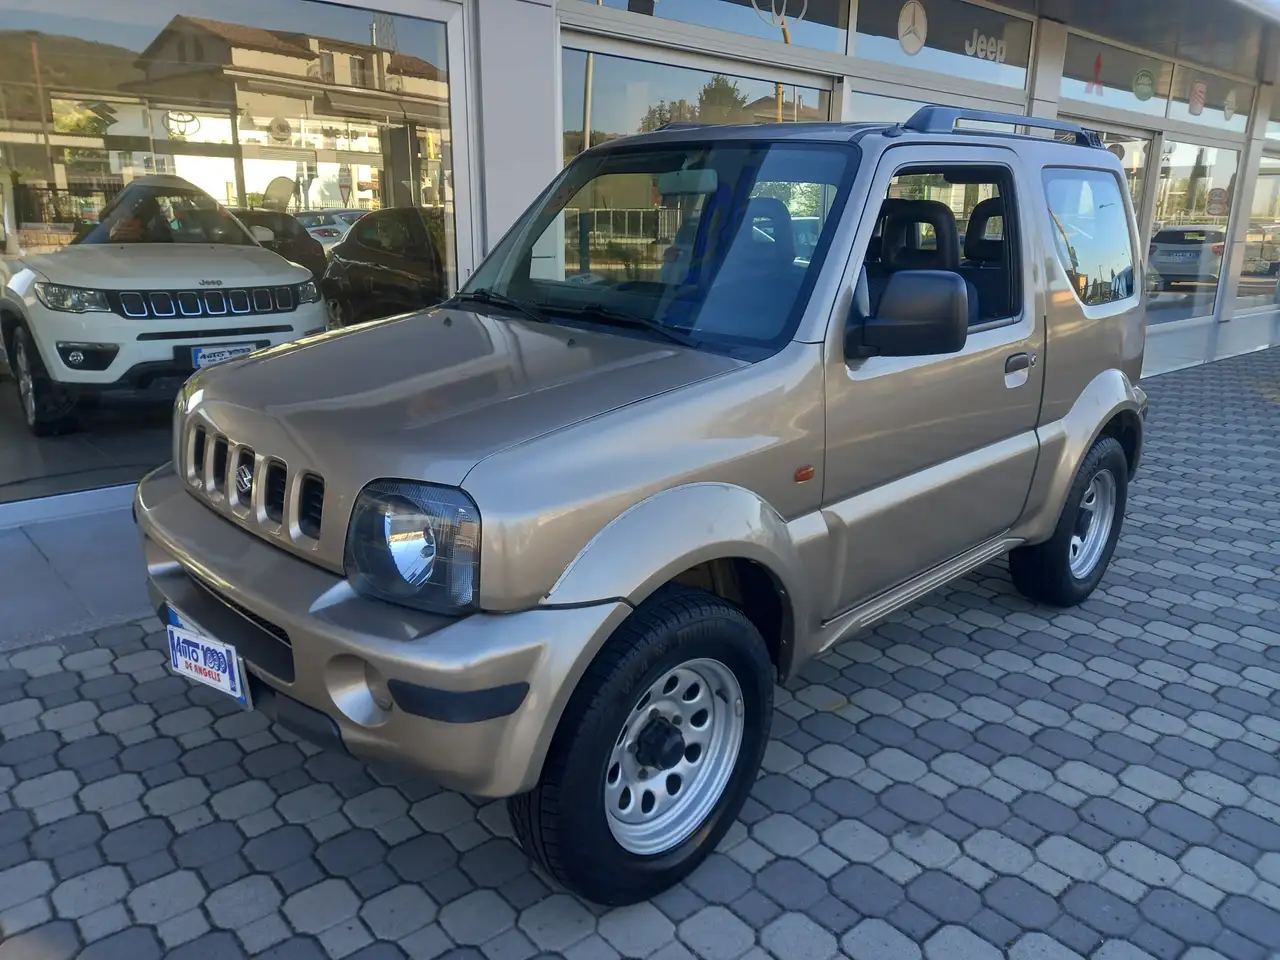 usato Suzuki Jimny SUV/Fuoristrada/Pick-up a Sala Consilina per € 9.500,-